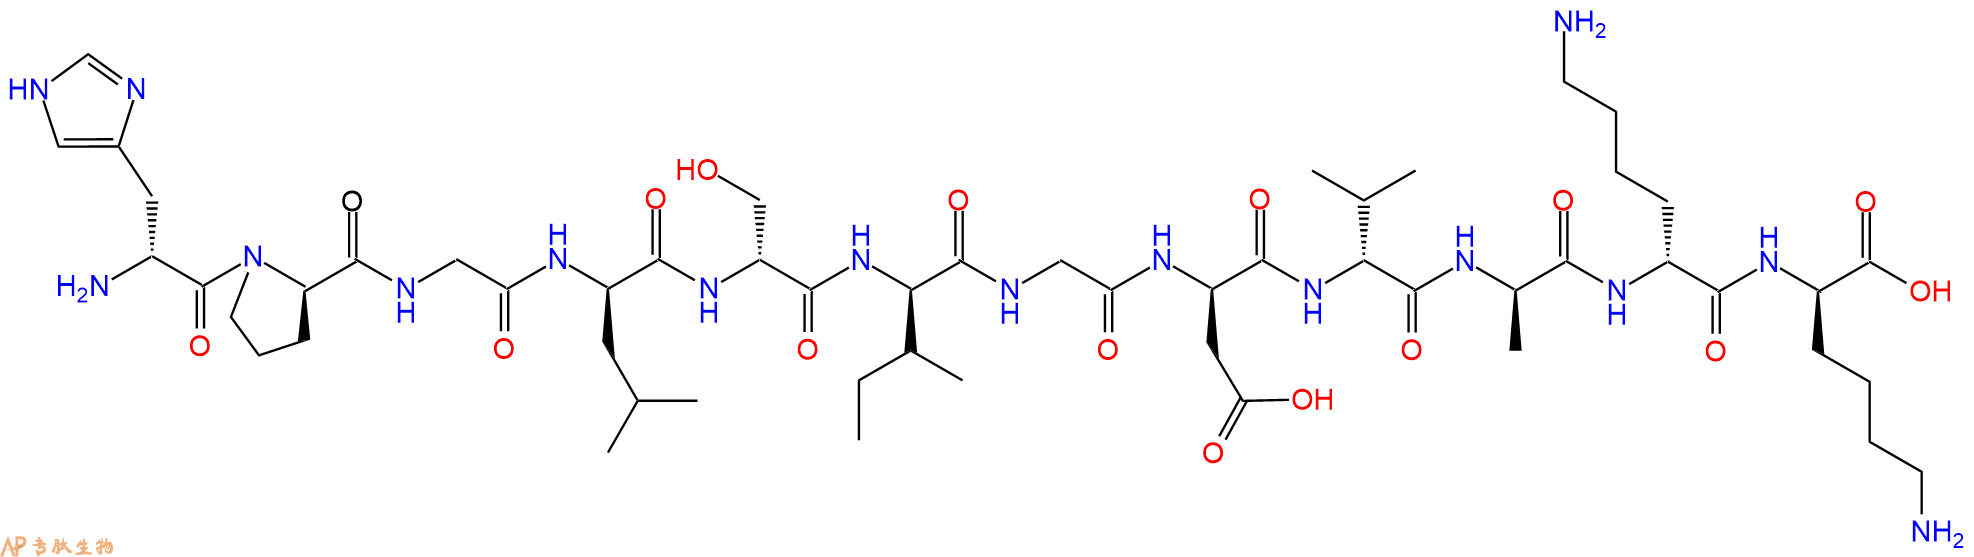 专肽生物产品H2N-DHis-DPro-Gly-DLeu-DSer-DIle-Gly-DAsp-DVal-DAl